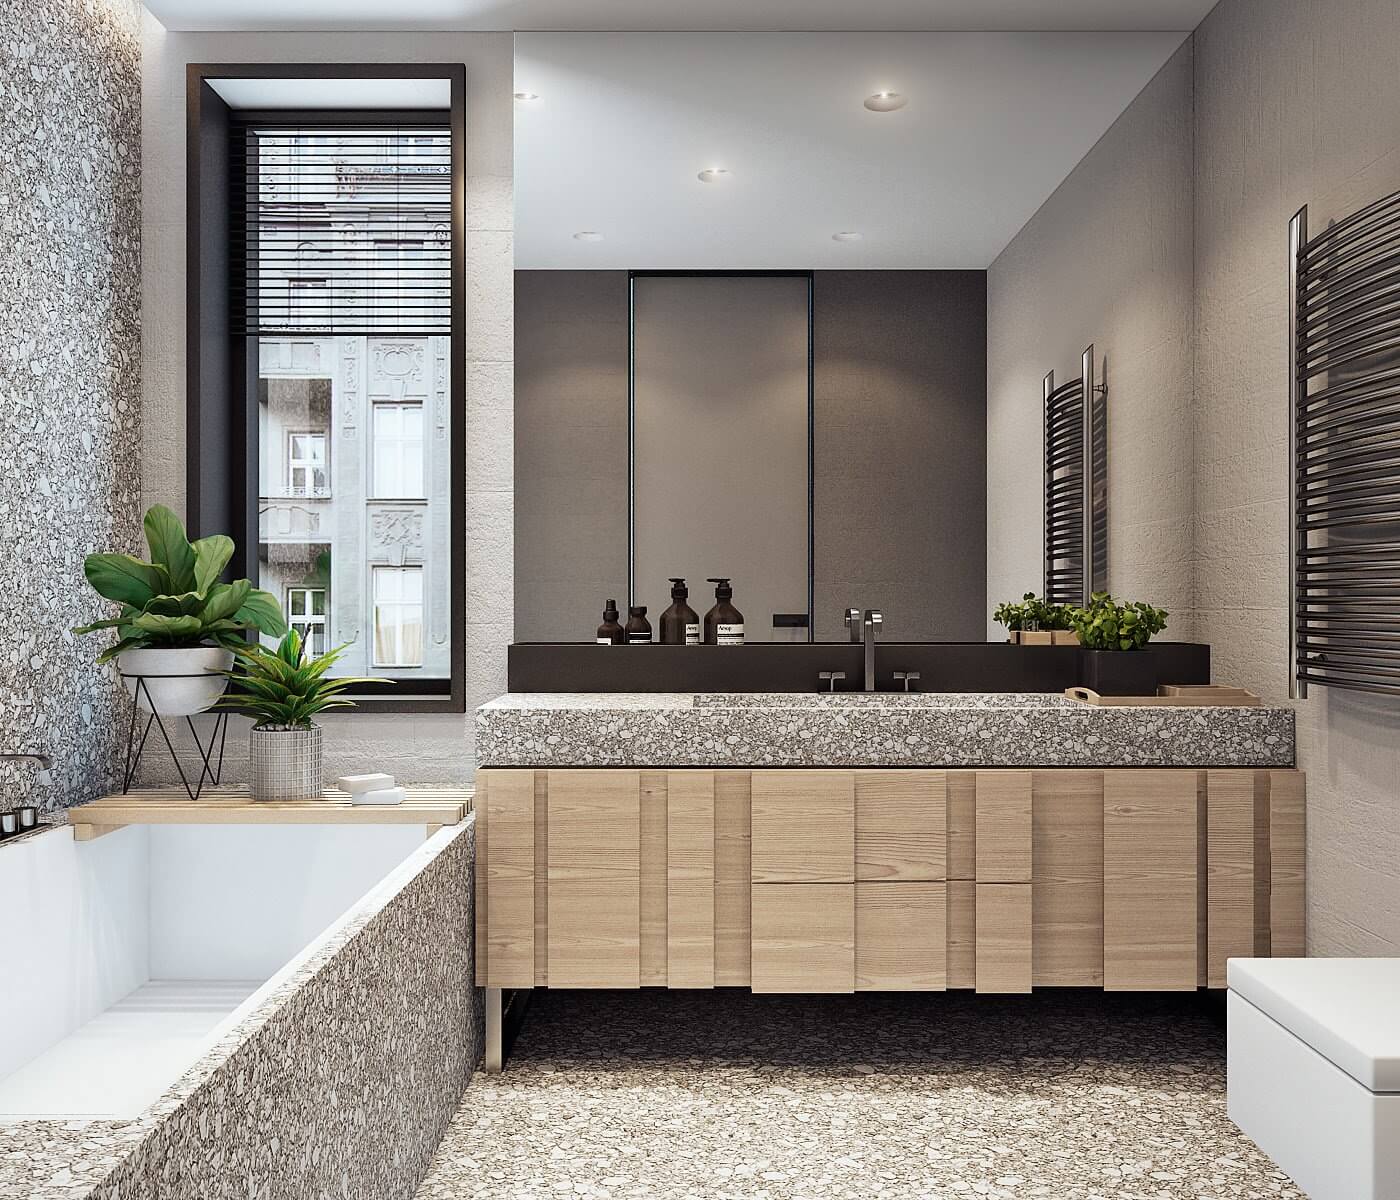 Stylish cozy apartment in italy bathroom cabinet wood - cgi visualization